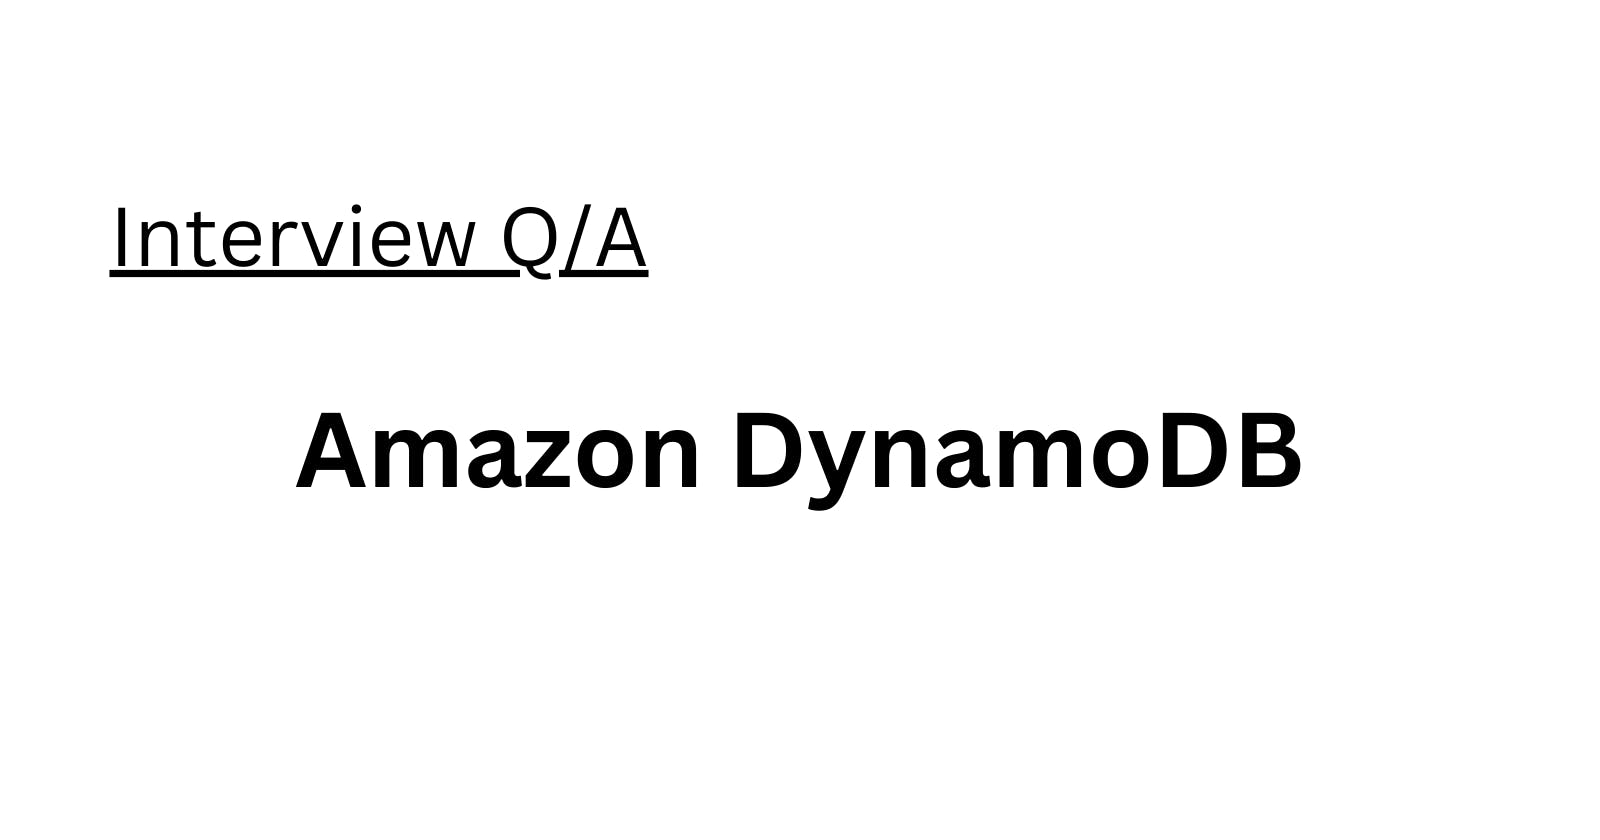 Amazon DynamoDB Interview Q/A